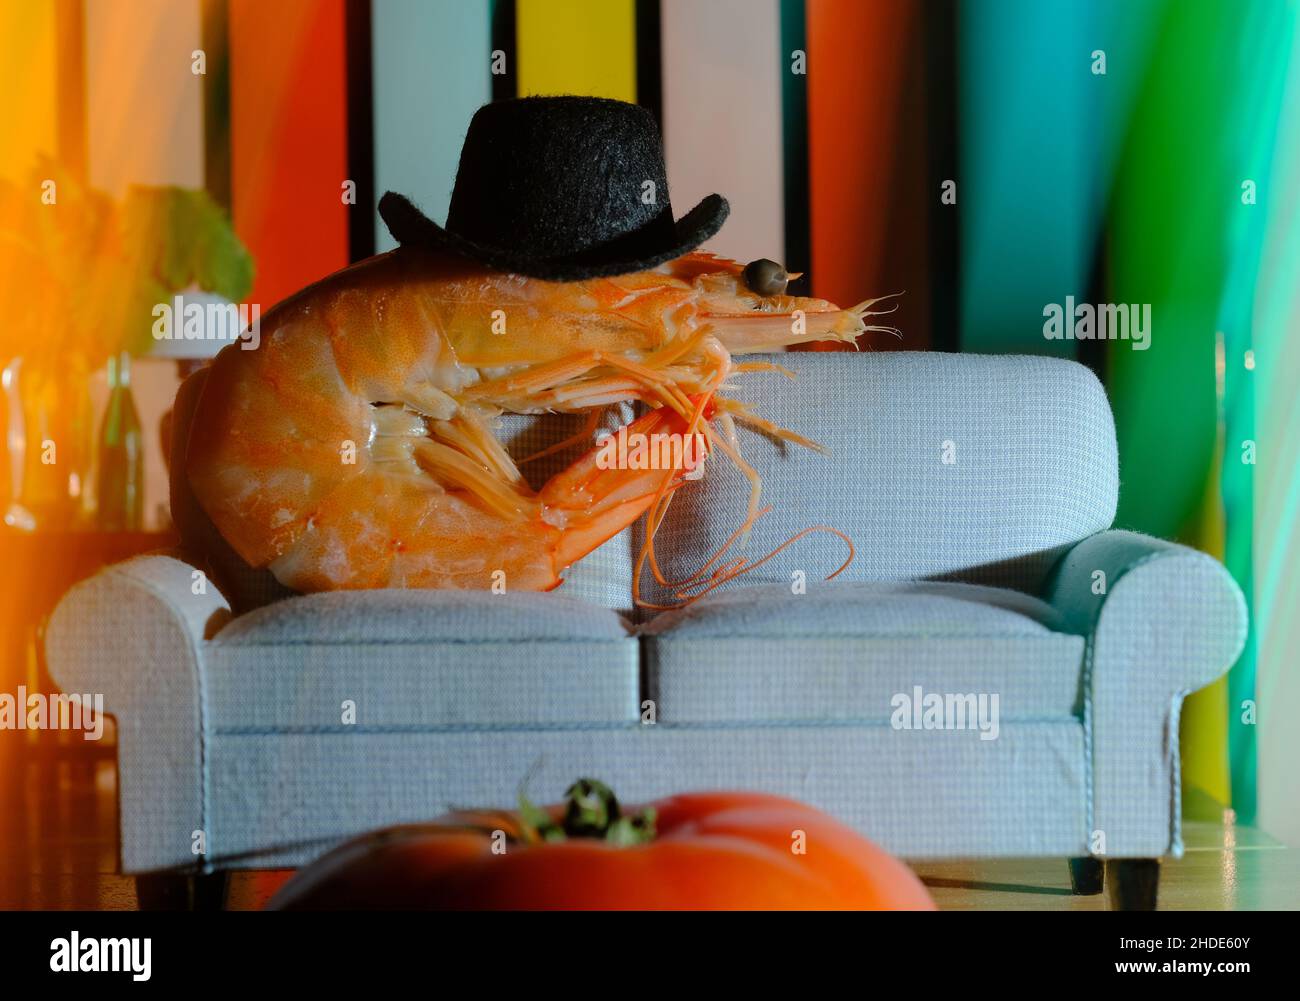 Cool jumbo shrimp chilling on sofa wearing top hat Stock Photo